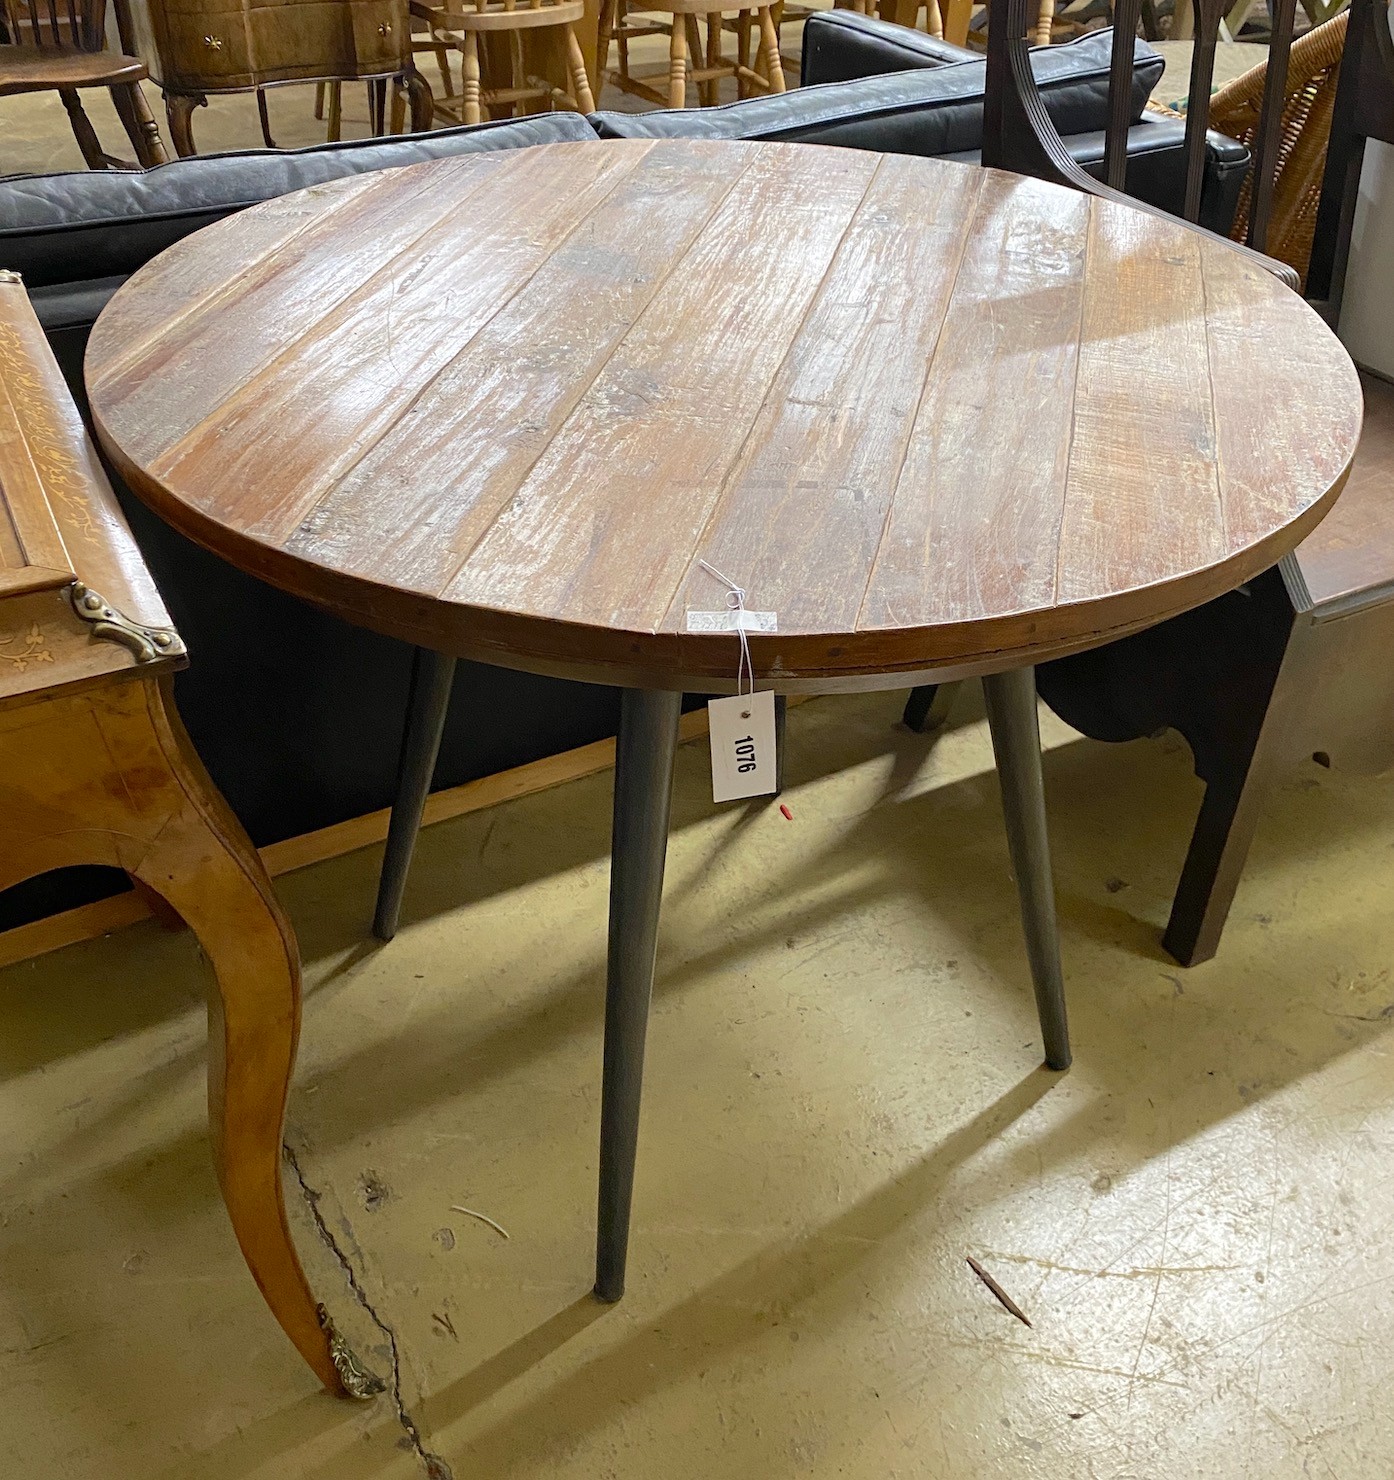 A teak top circular table with metal underframe, diameter 91cm, height 74cm